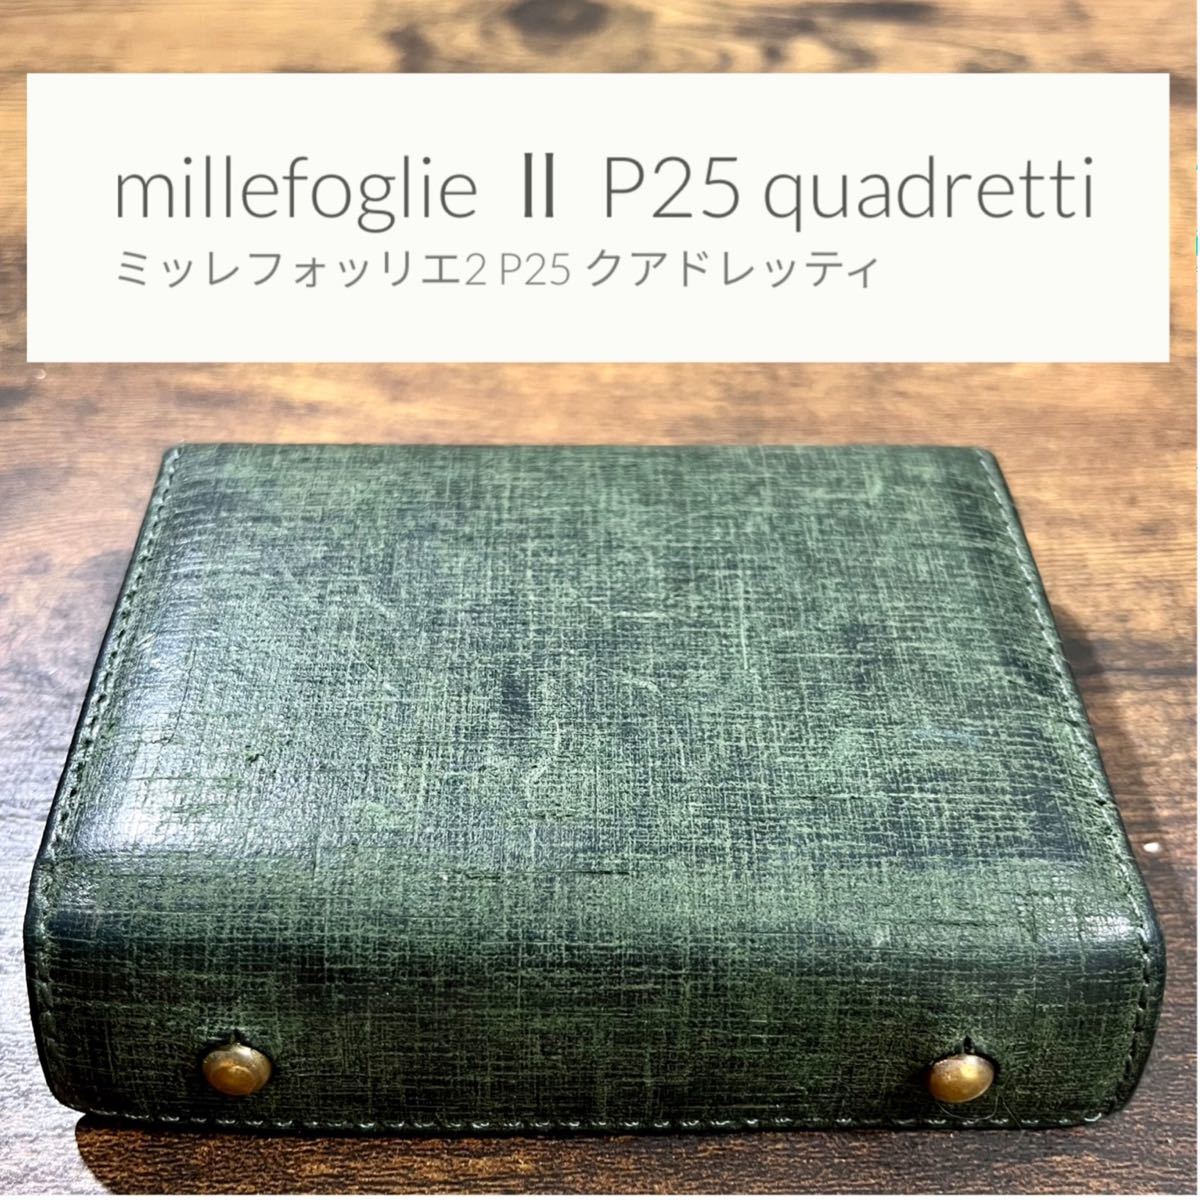 m+ millefoglieⅡP25 quadretti green エムピウ ミッレフォッリエ2 P25 クアドレッティ